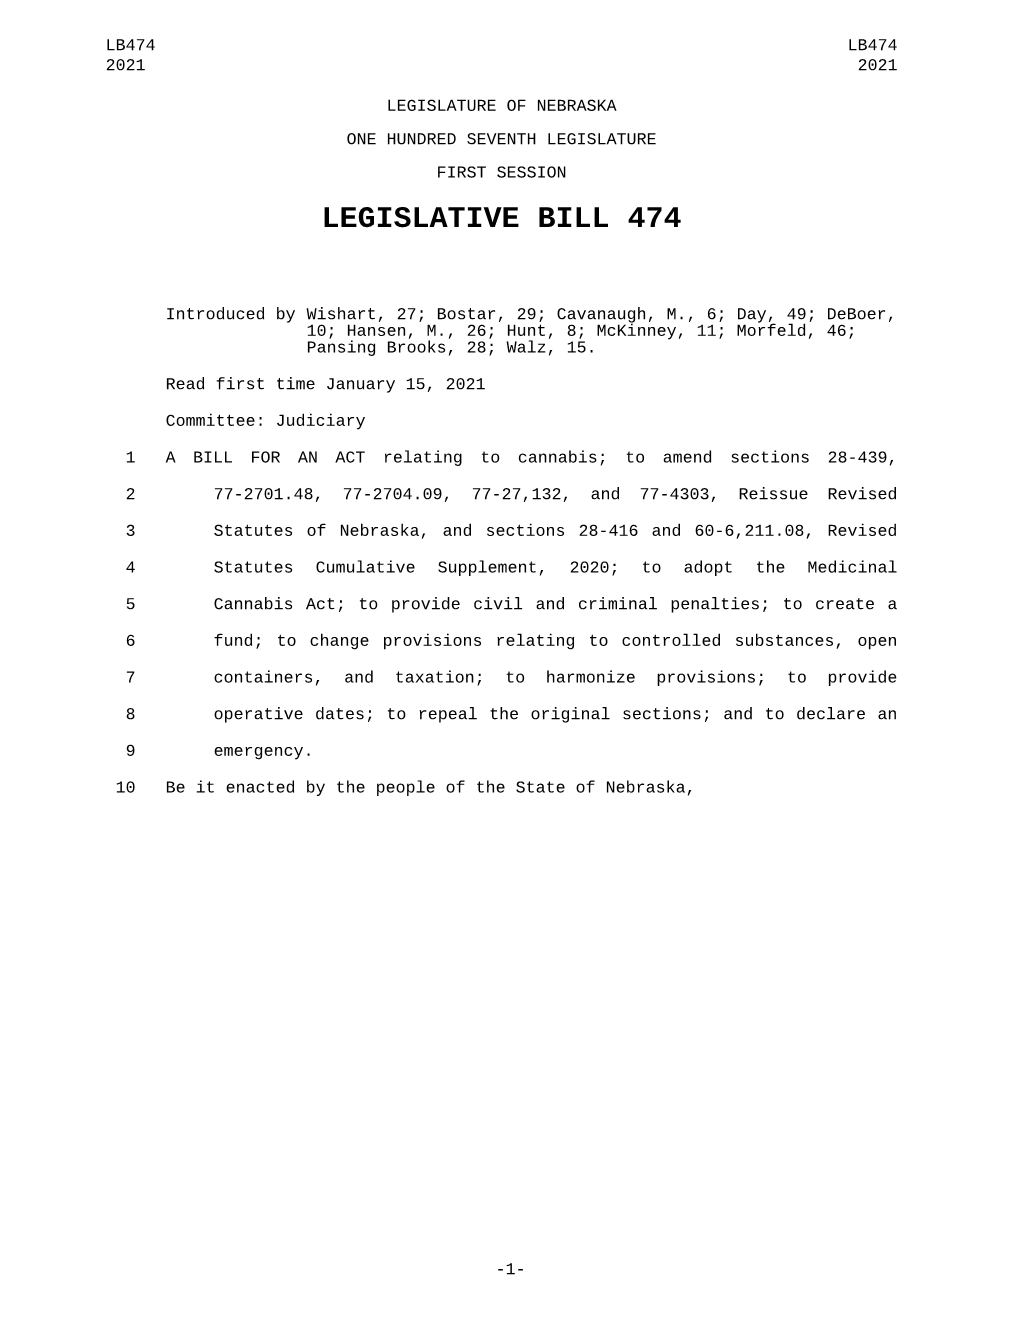 Legislative Bill 474